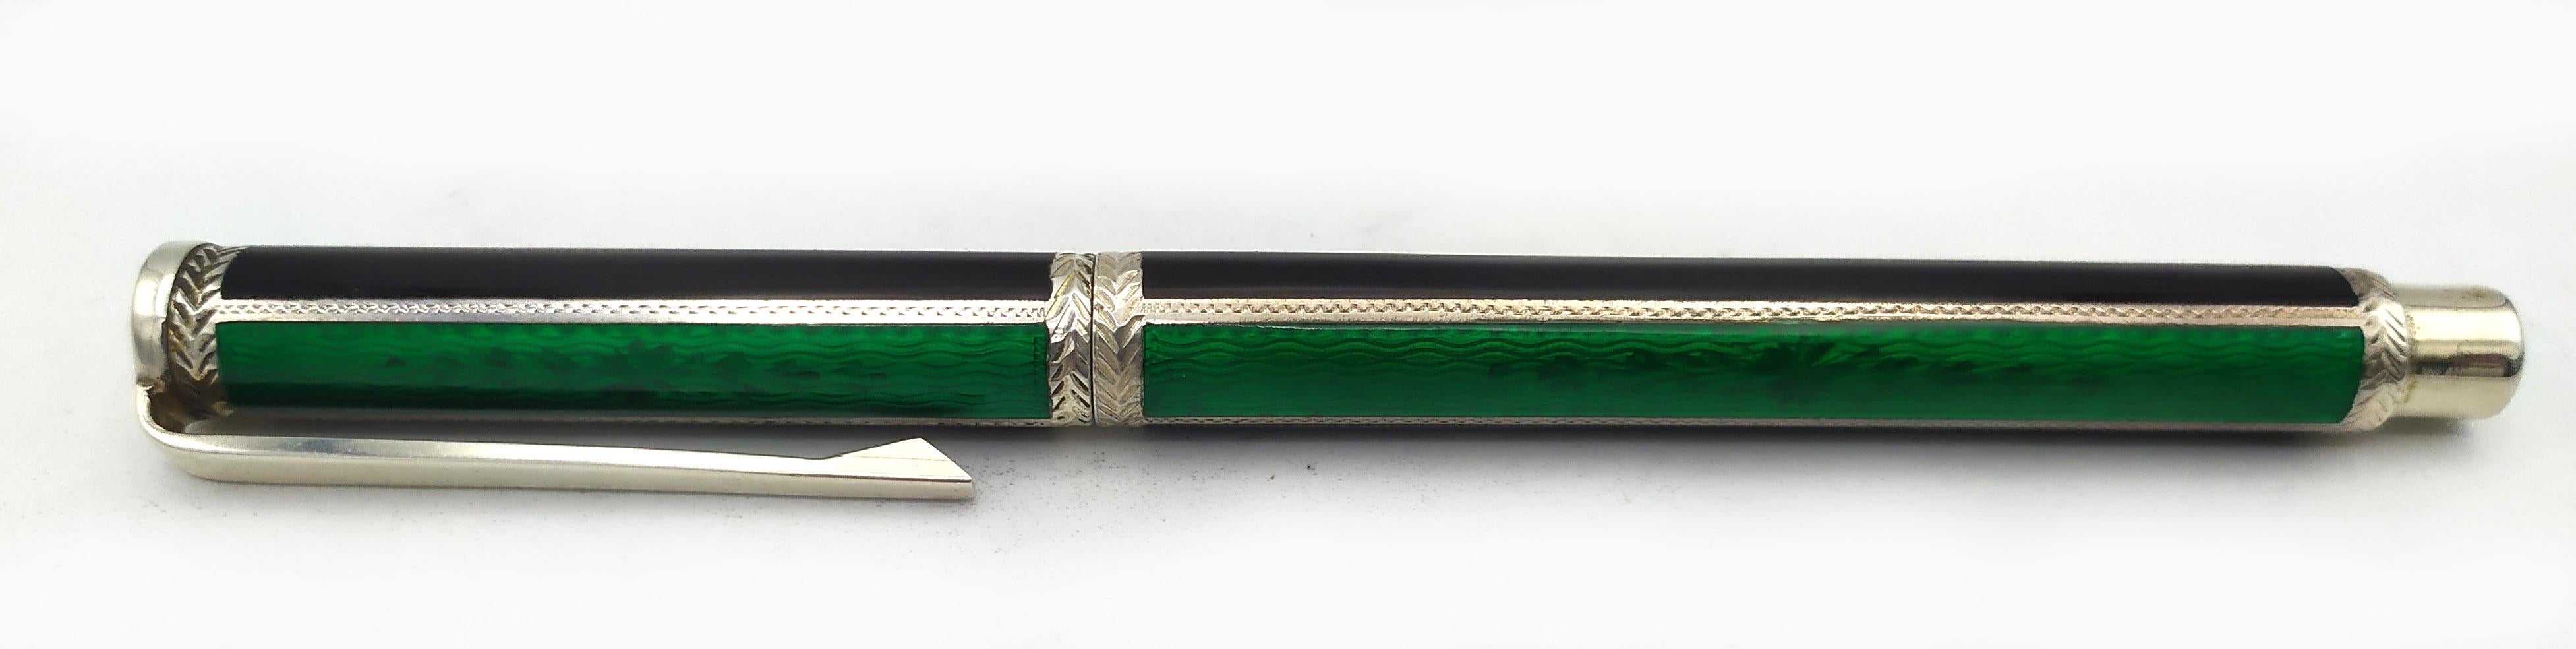 Fountain pen, Ballpoint pen and tray for a Desk Set green enamel Salimbeni  For Sale 9